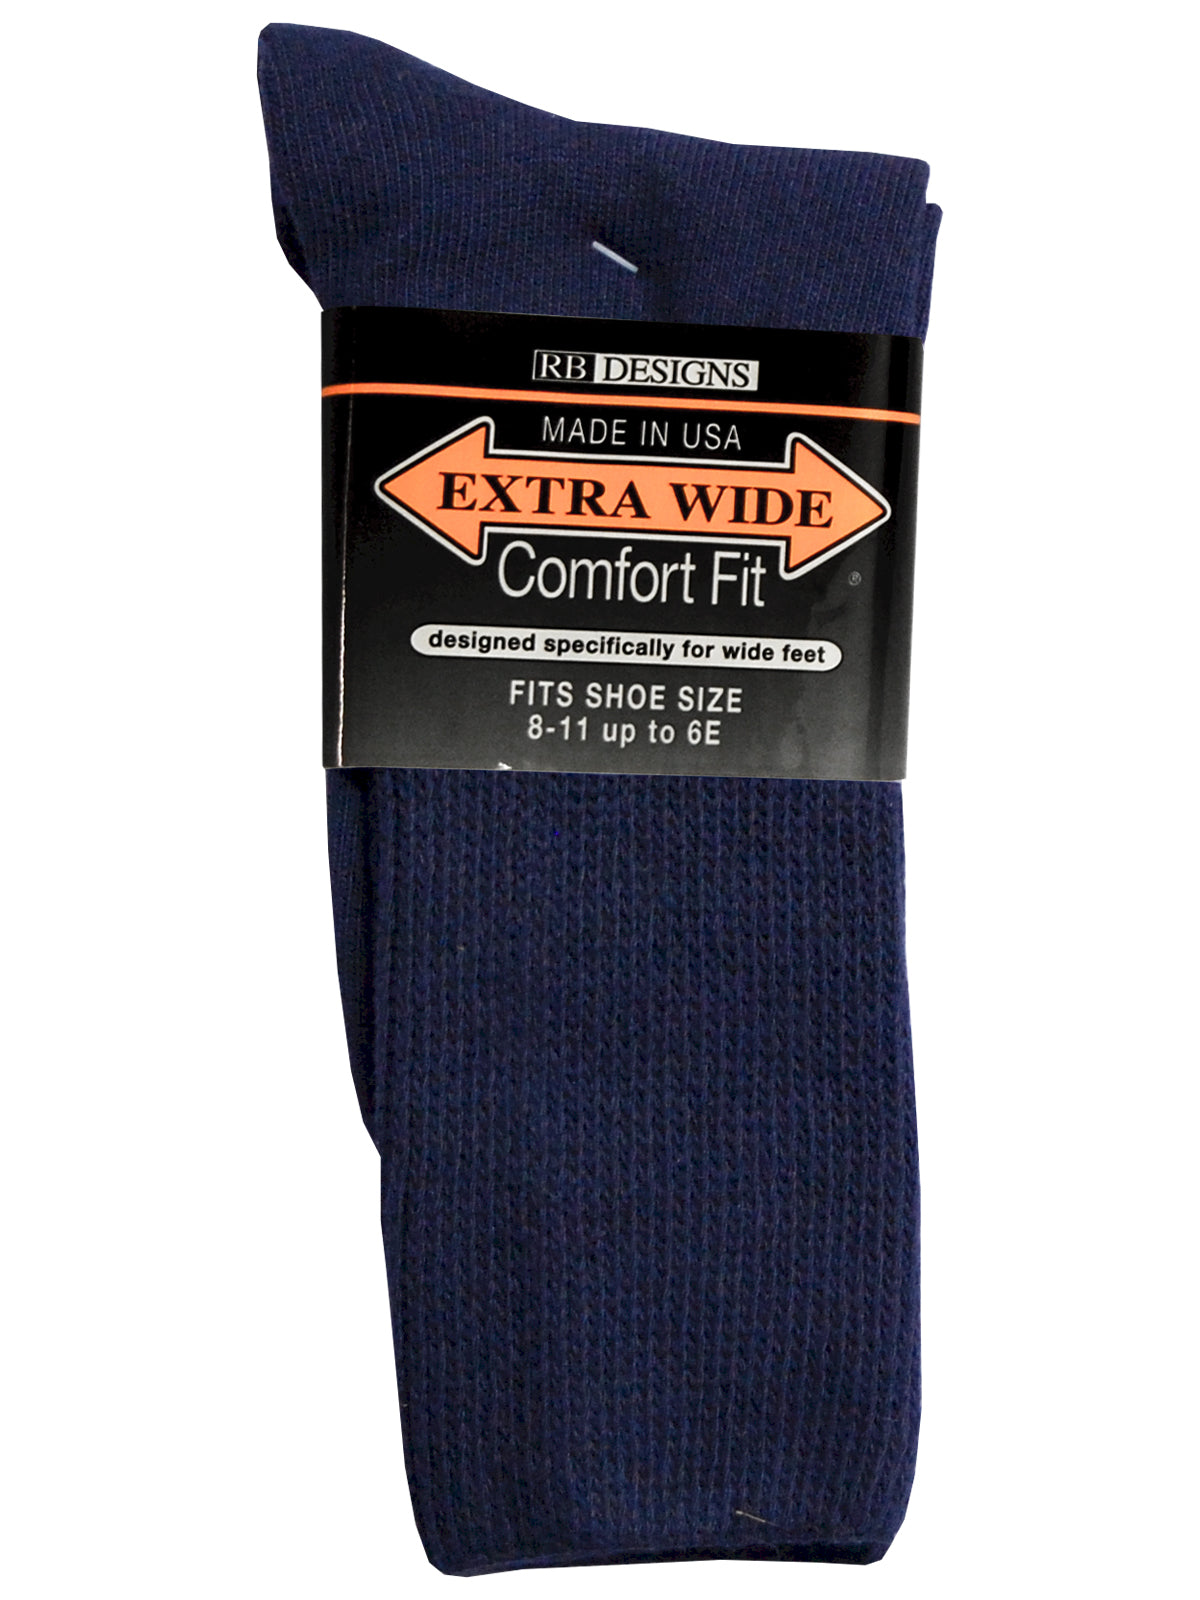 Extra Wide Men's Comfort Fit Athletic Crew Socks in Navy - Size Medium (8.5 - 11.5)